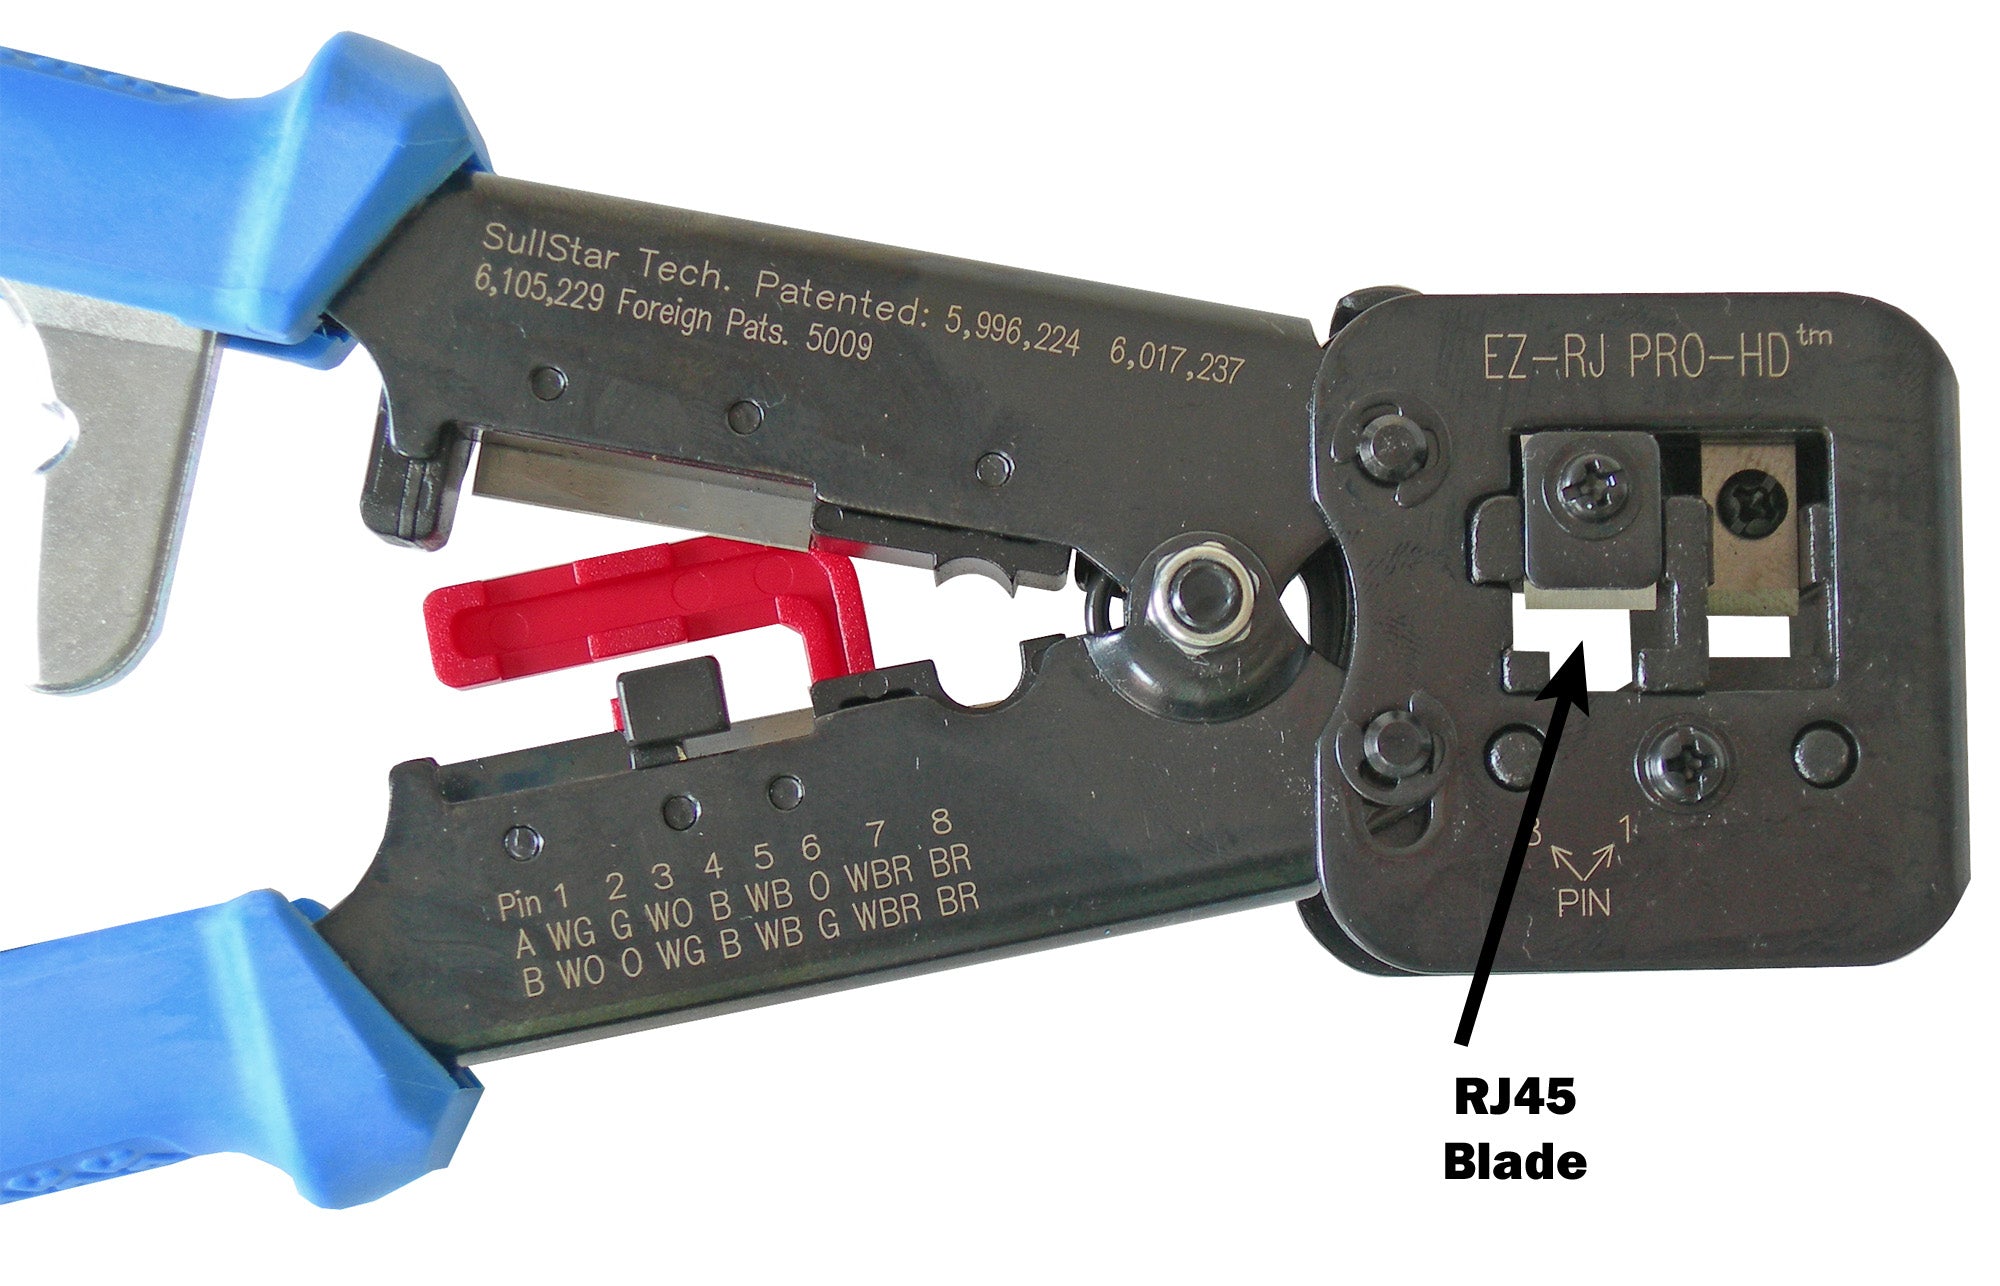 Pack 10 RJ45 Blades for EZ RJPRO HD Tool, 100054SBL-10C Platinum Tools